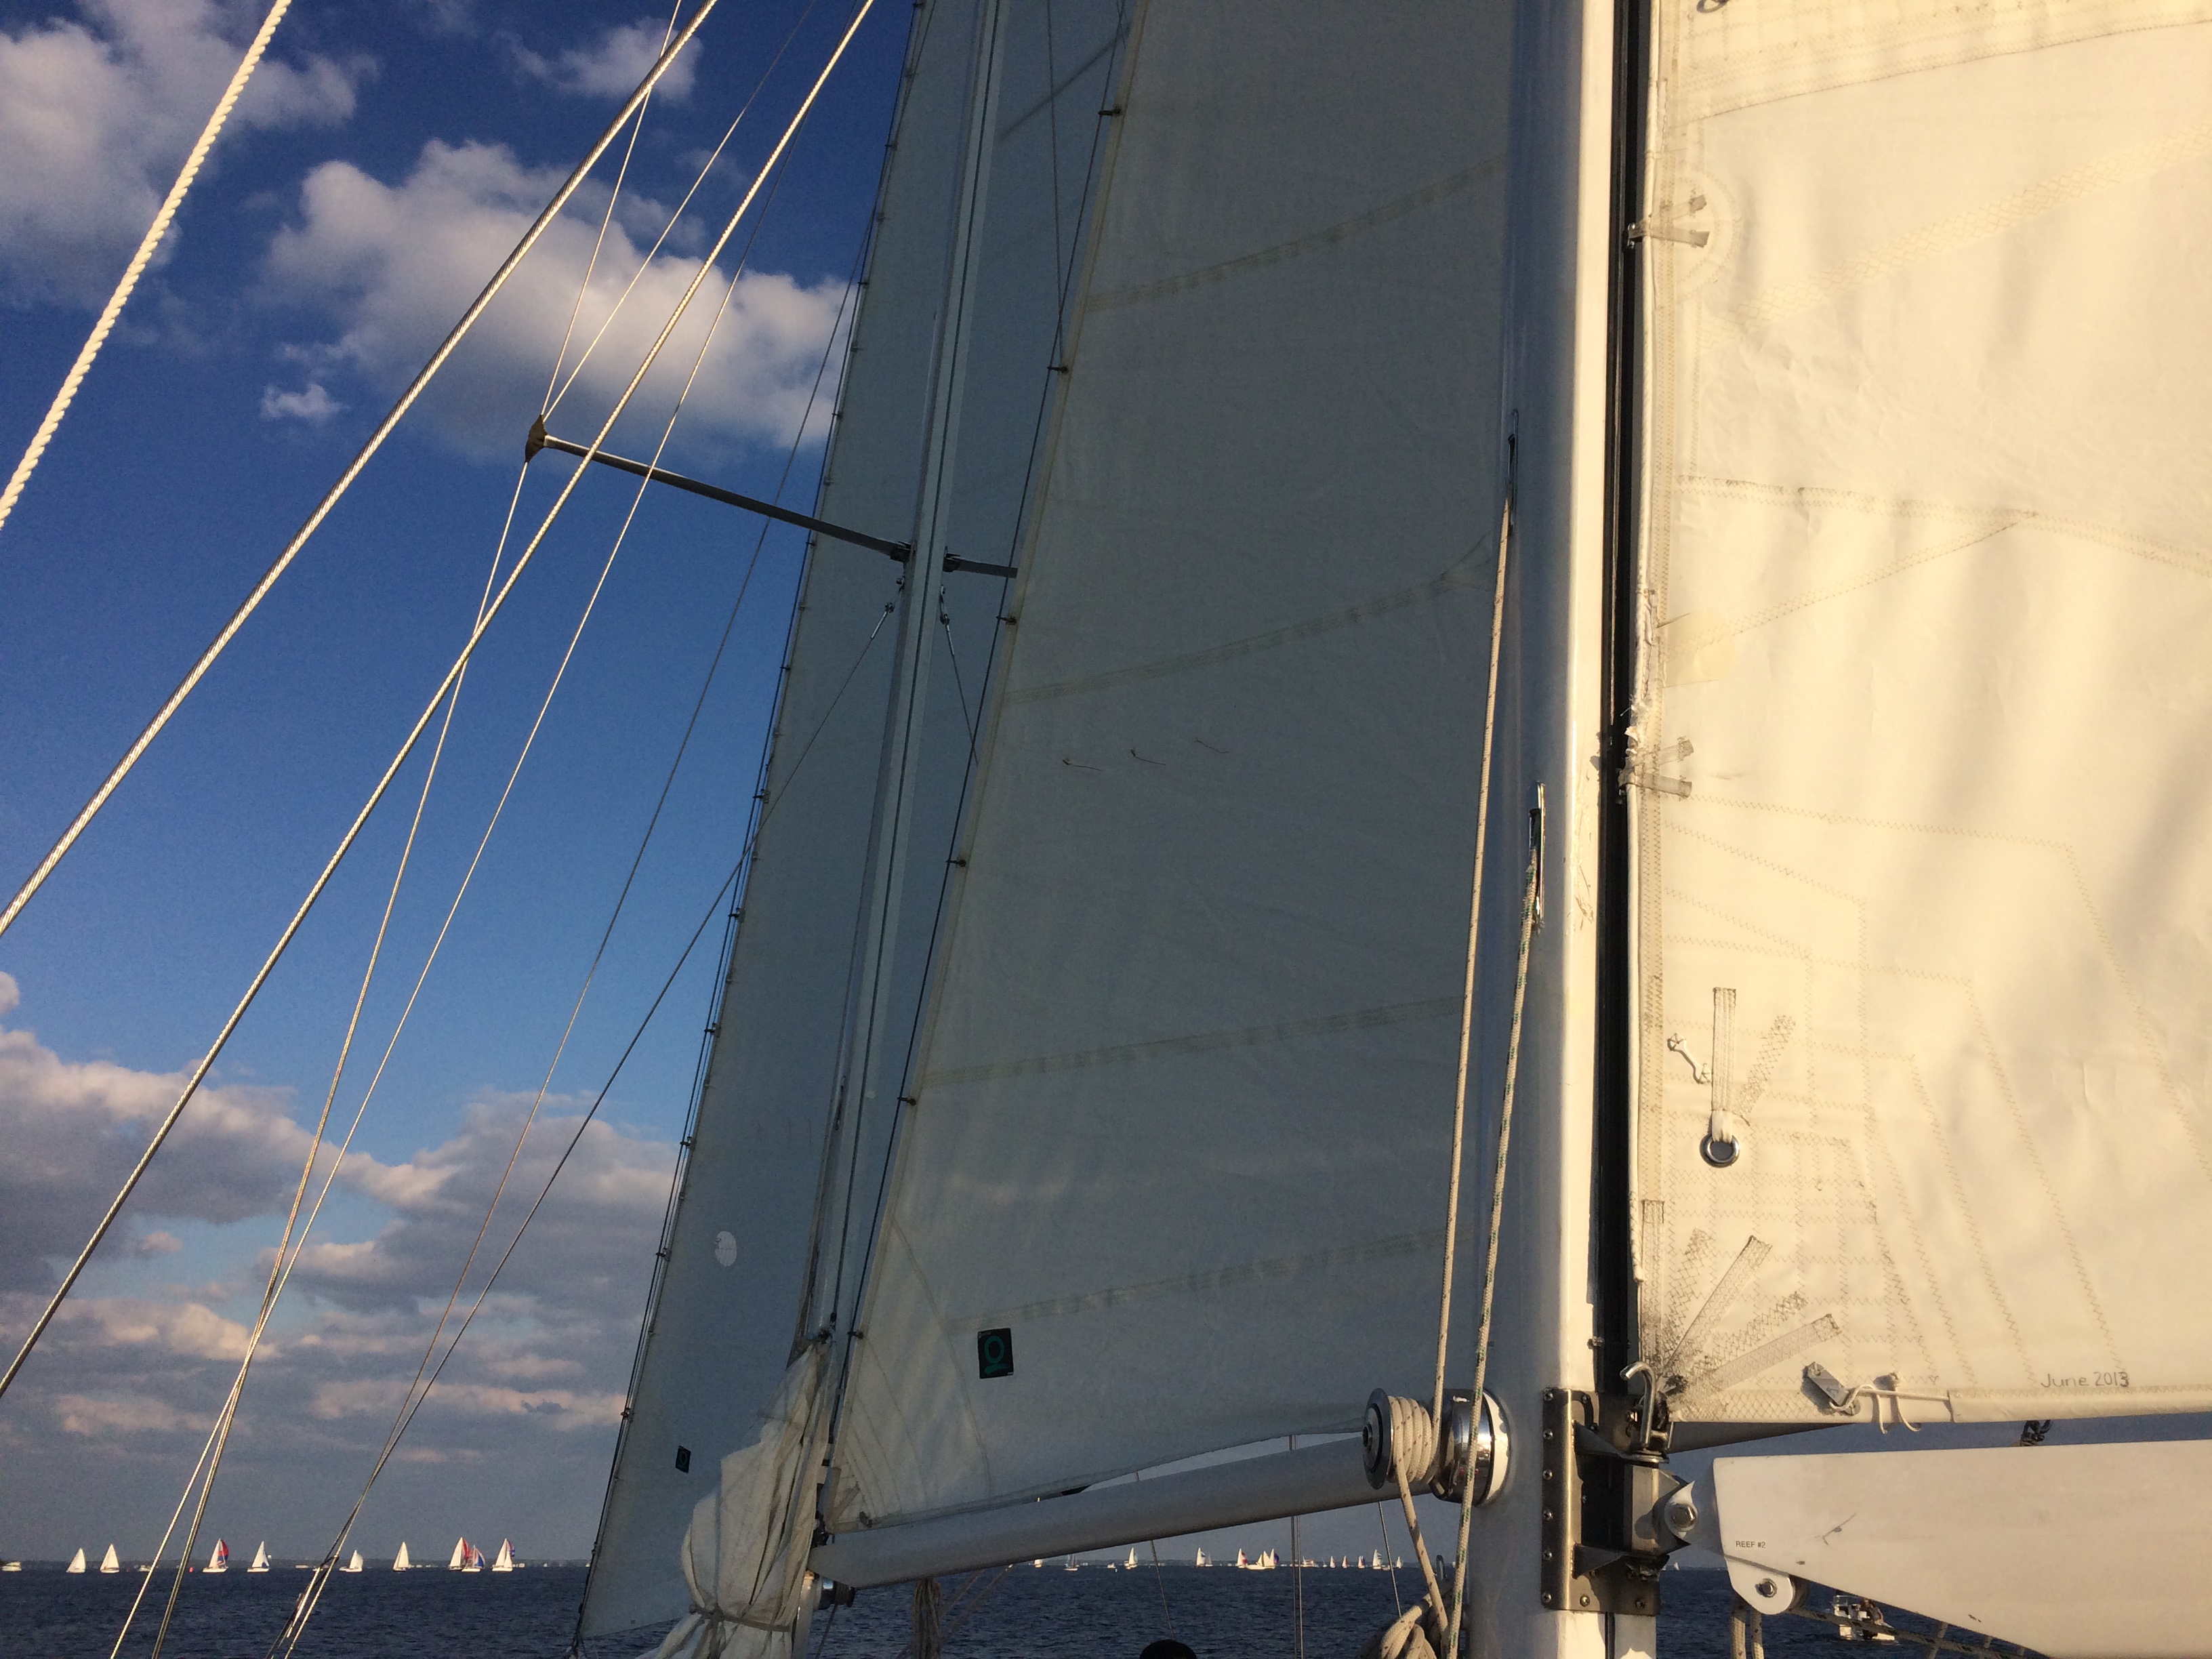 Looking through schooner sails at sailboats on the blue horizon